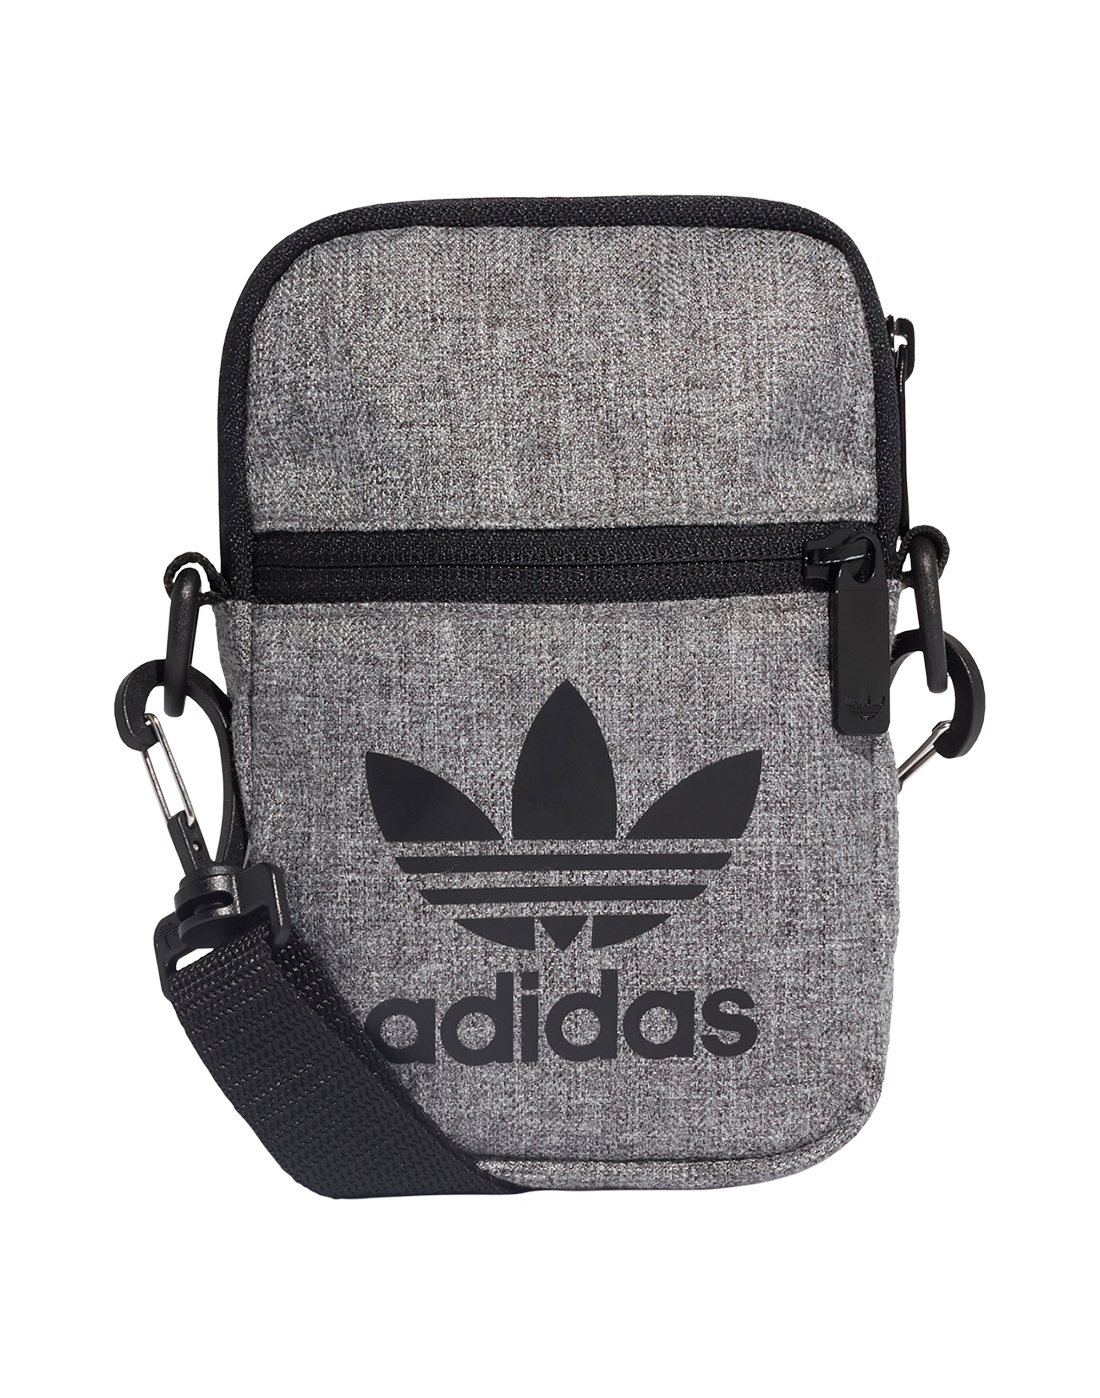 Adidas ORIGINALS SHOULDER FESTIVAL BAG Flight Travel Man Bag - Gray - NEW |  eBay